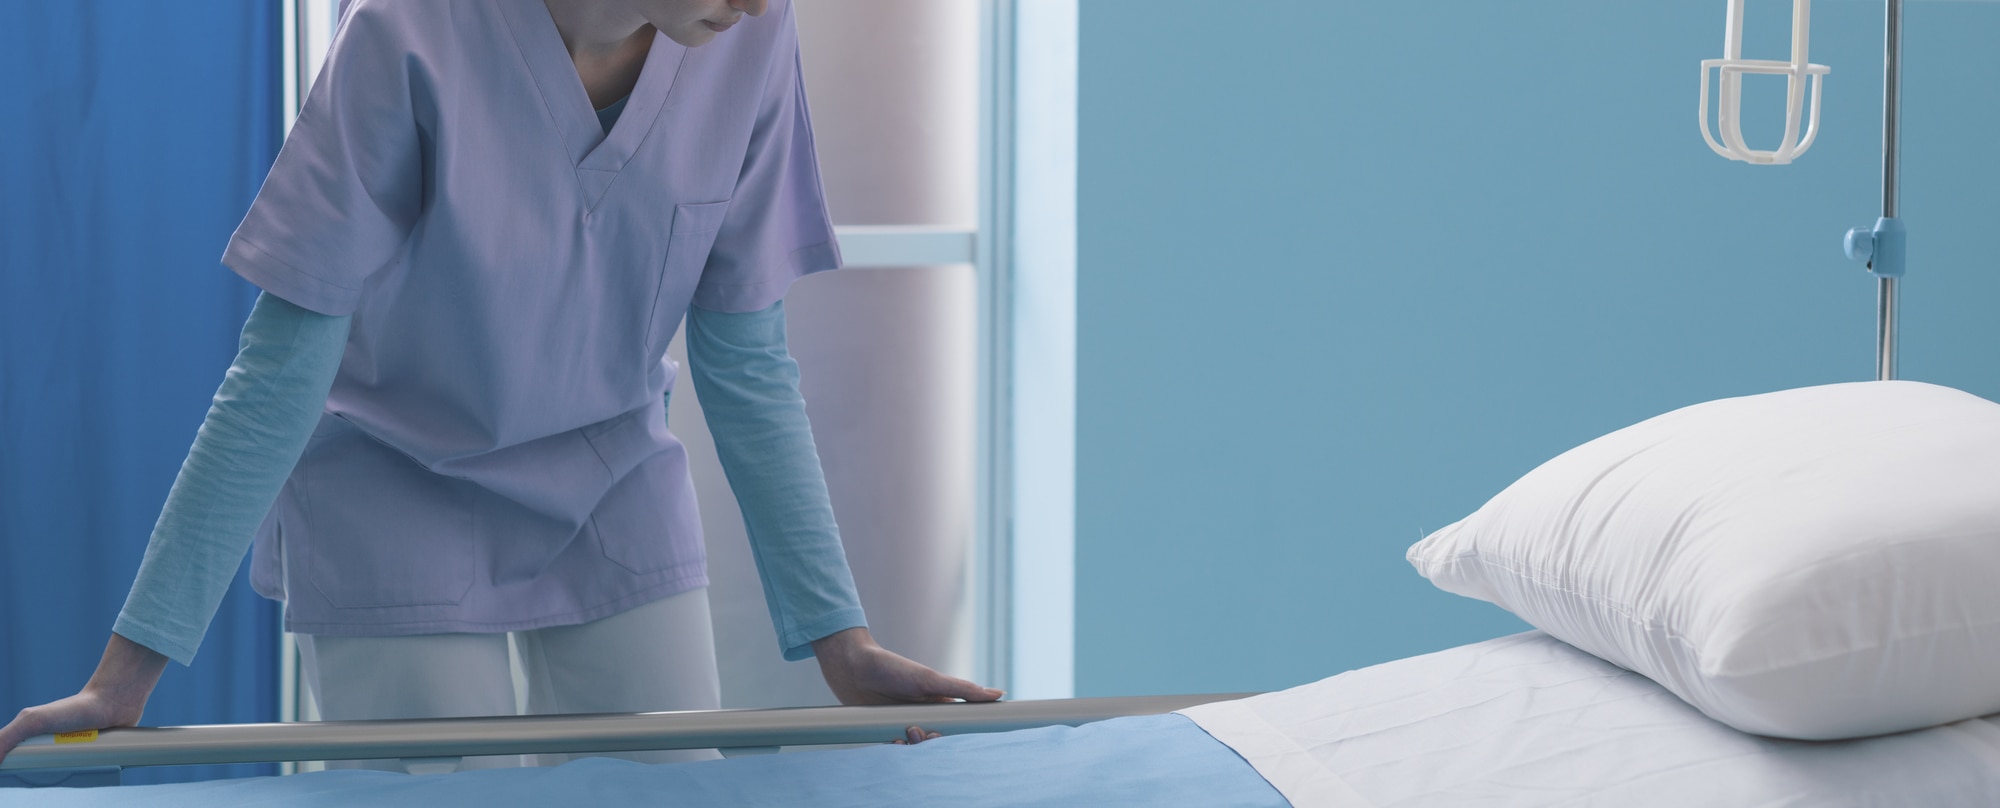 Bedrail Injuries in Nursing Homes - How These Injuries Happen